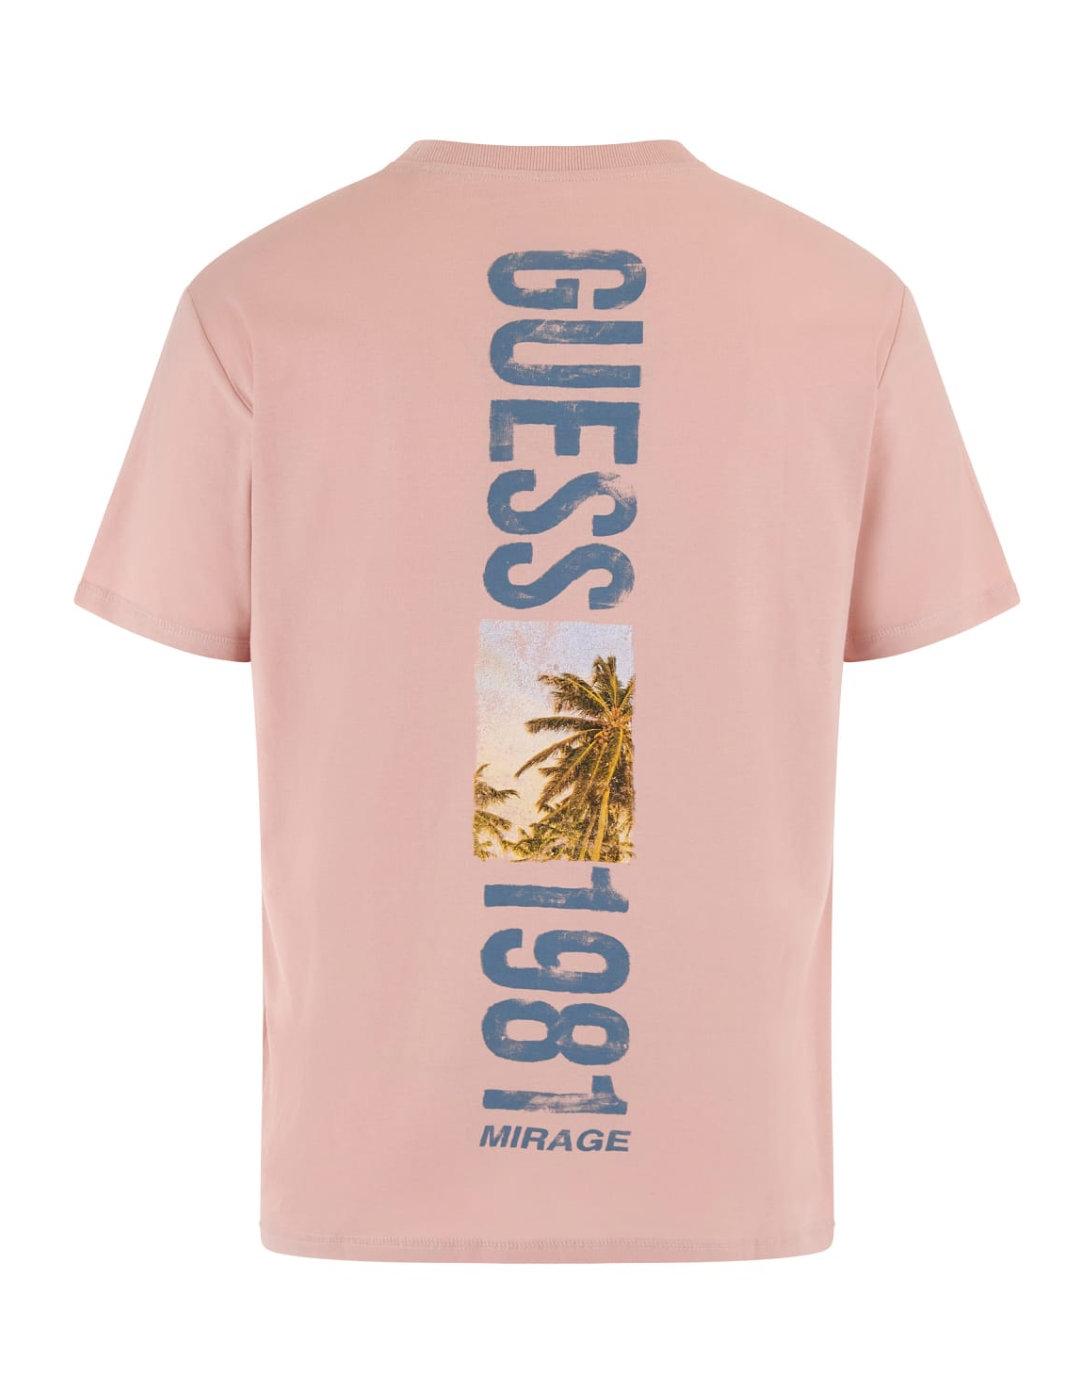 Camiseta Guess Mirage rosa manga corta para hombre